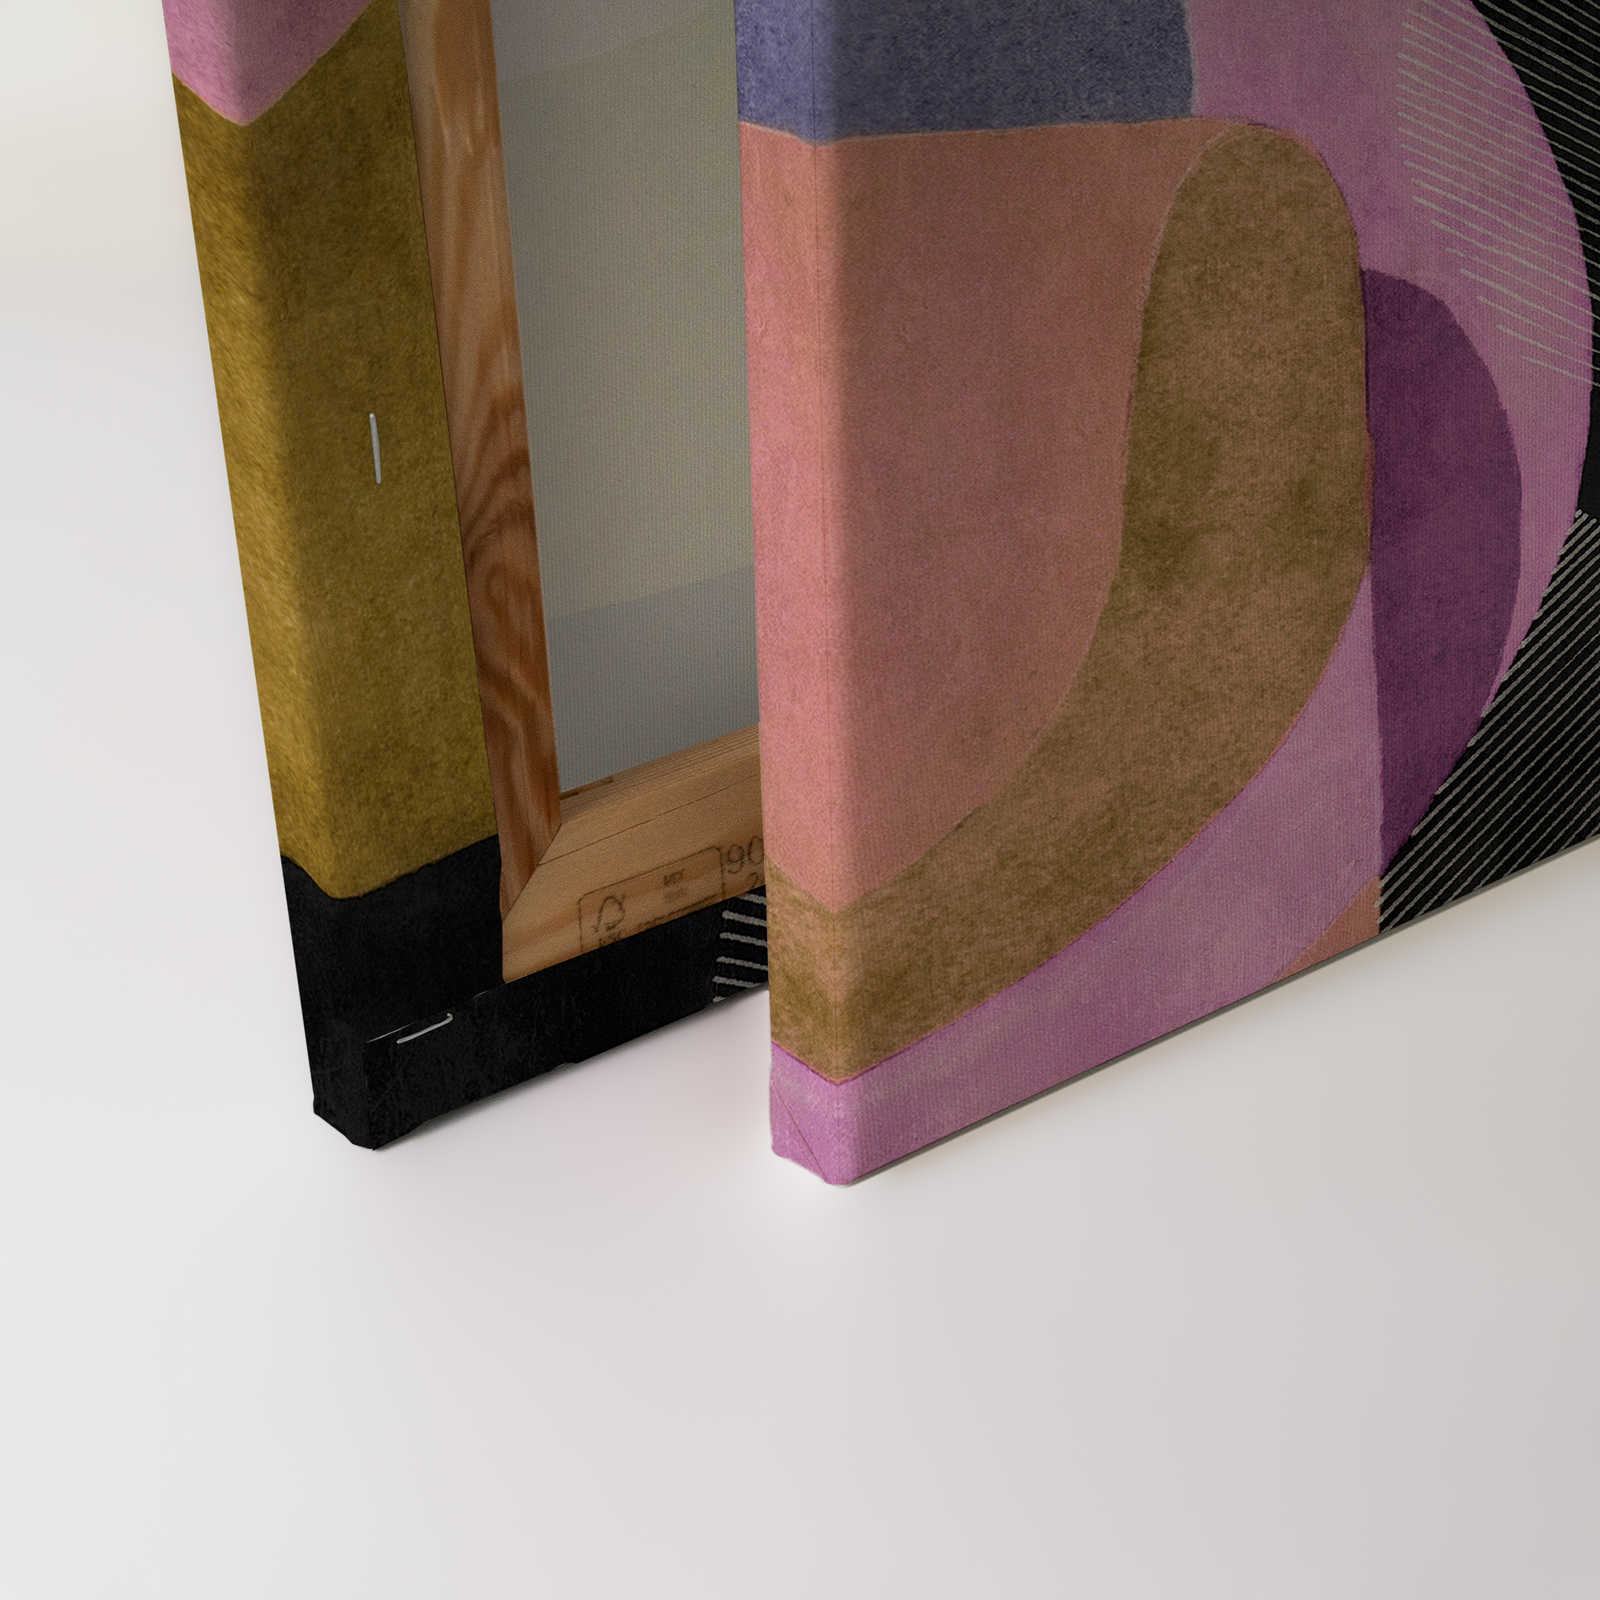             Meeting Place 3 - Leinwandbild Ethno Design im bunten Colour Block Stil – 1,20 m x 0,80 m
        